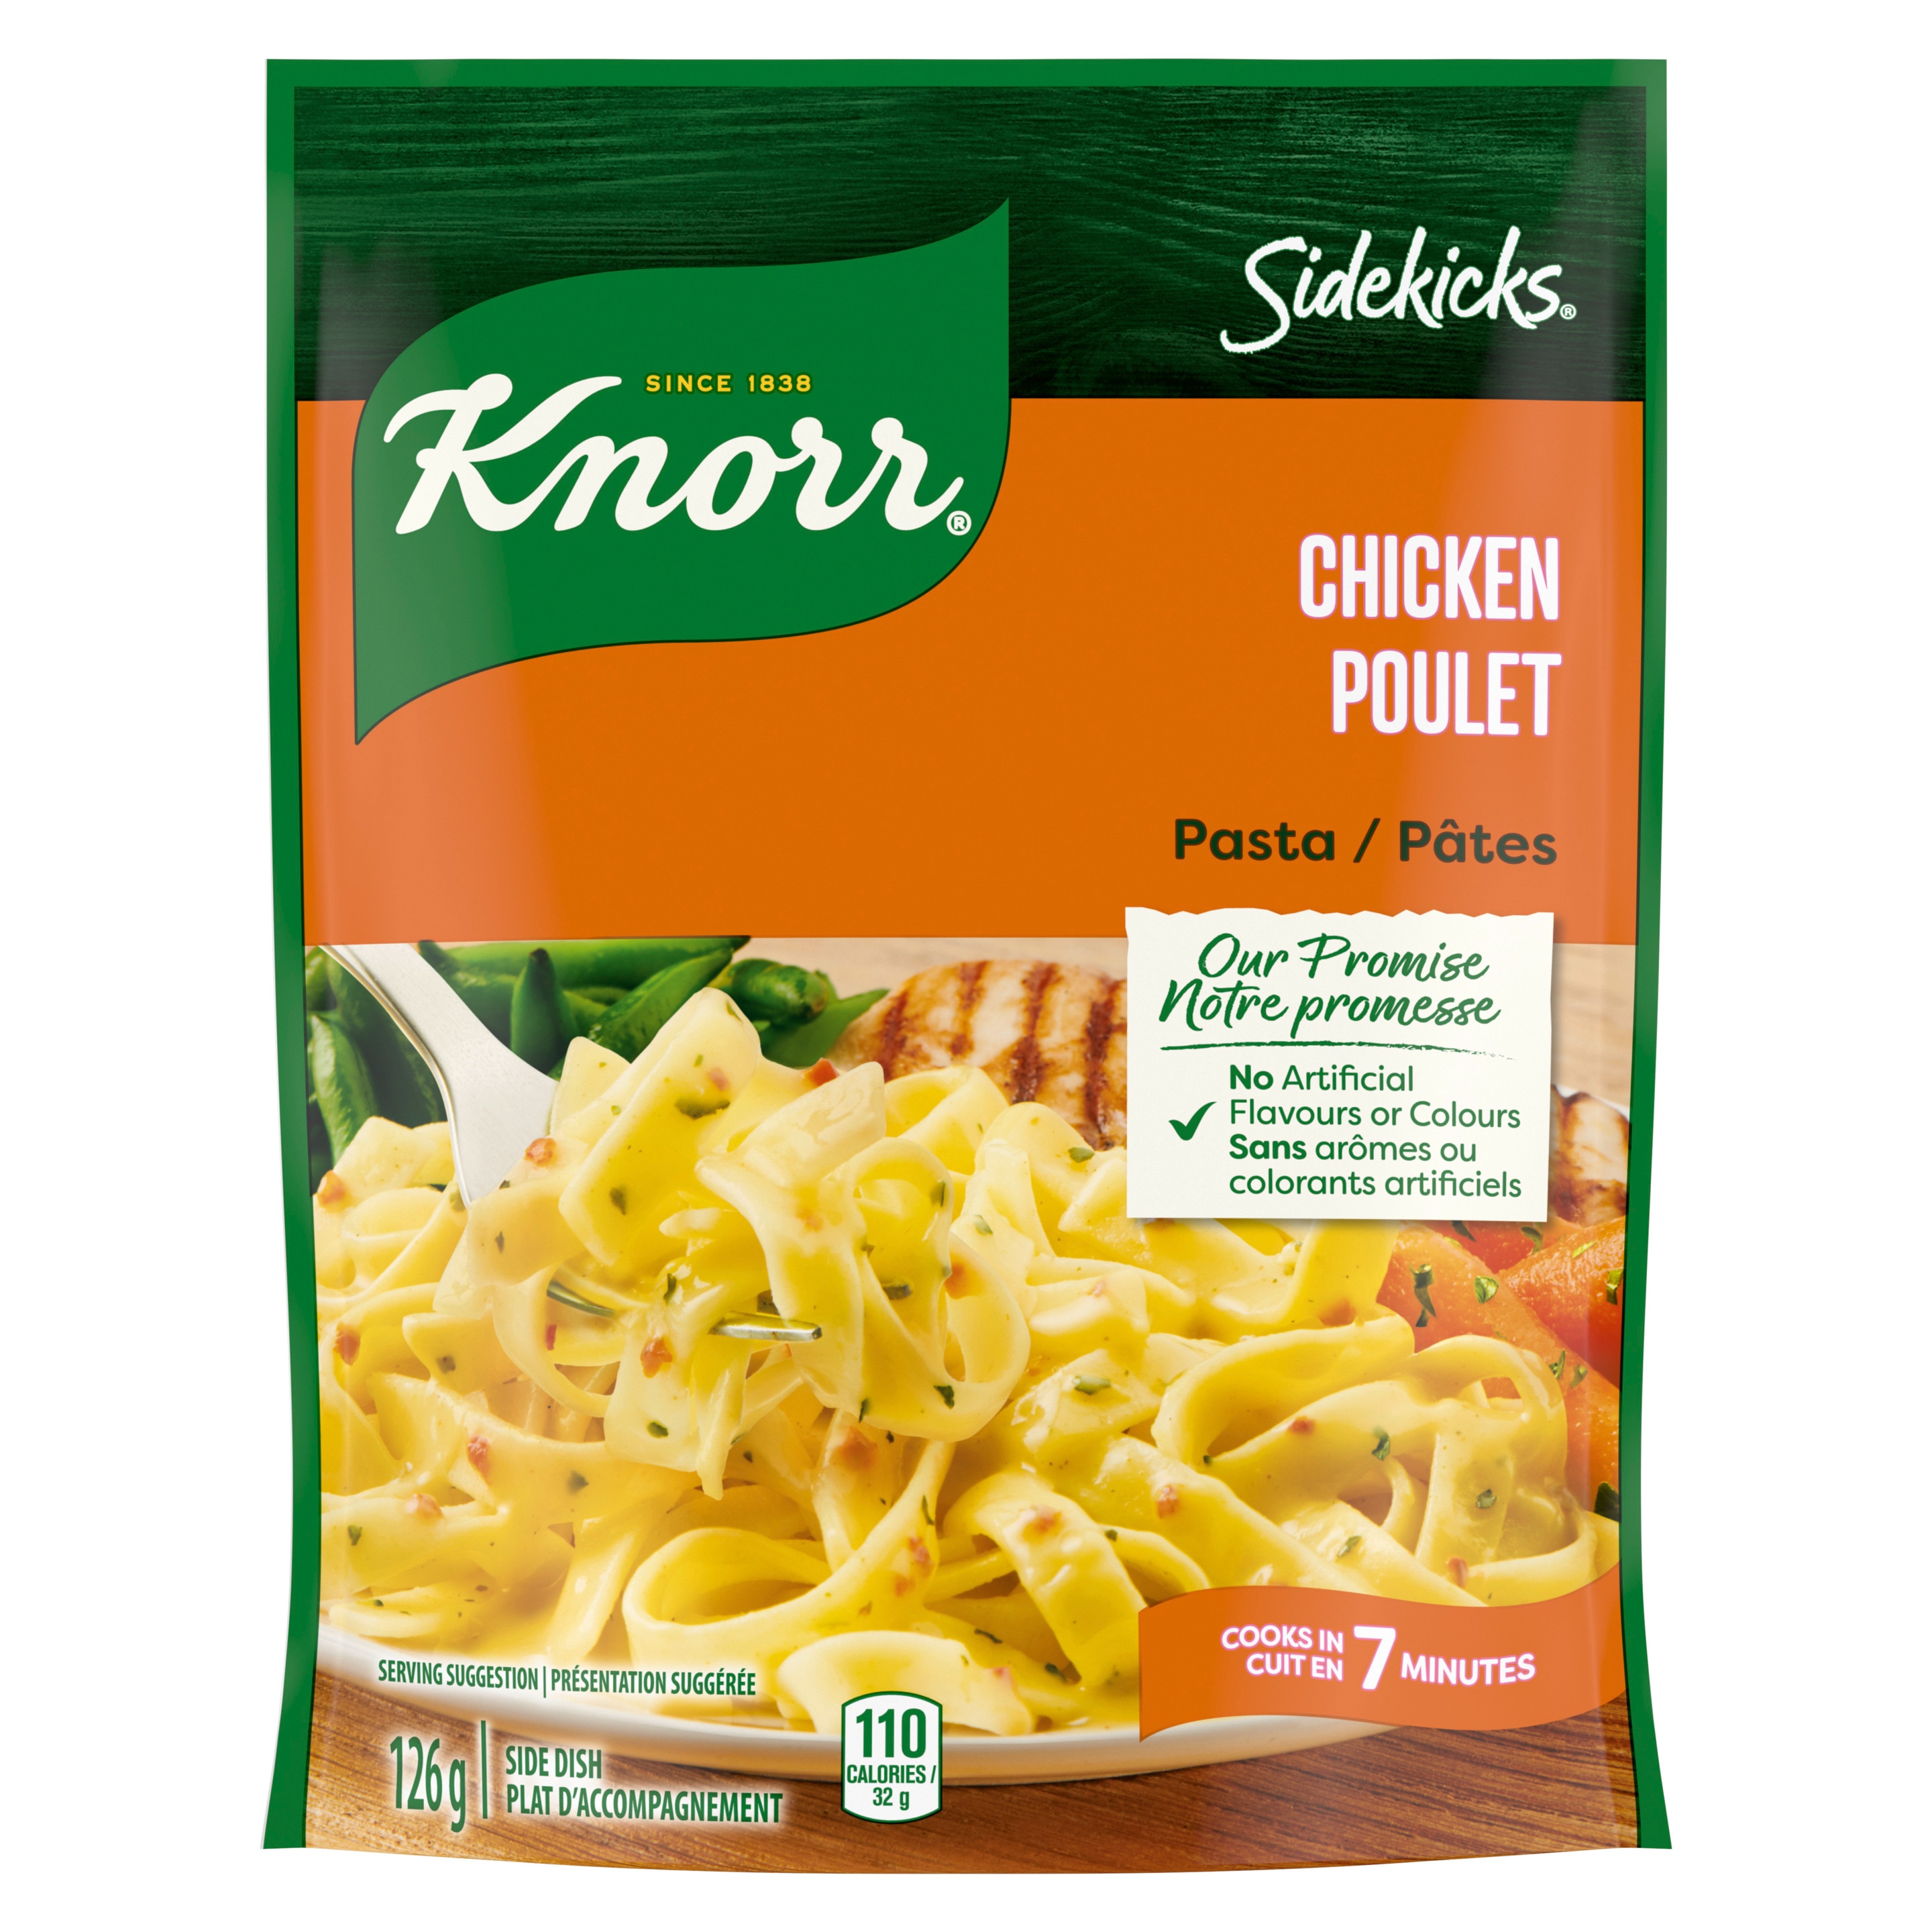 Knorr Sidekick